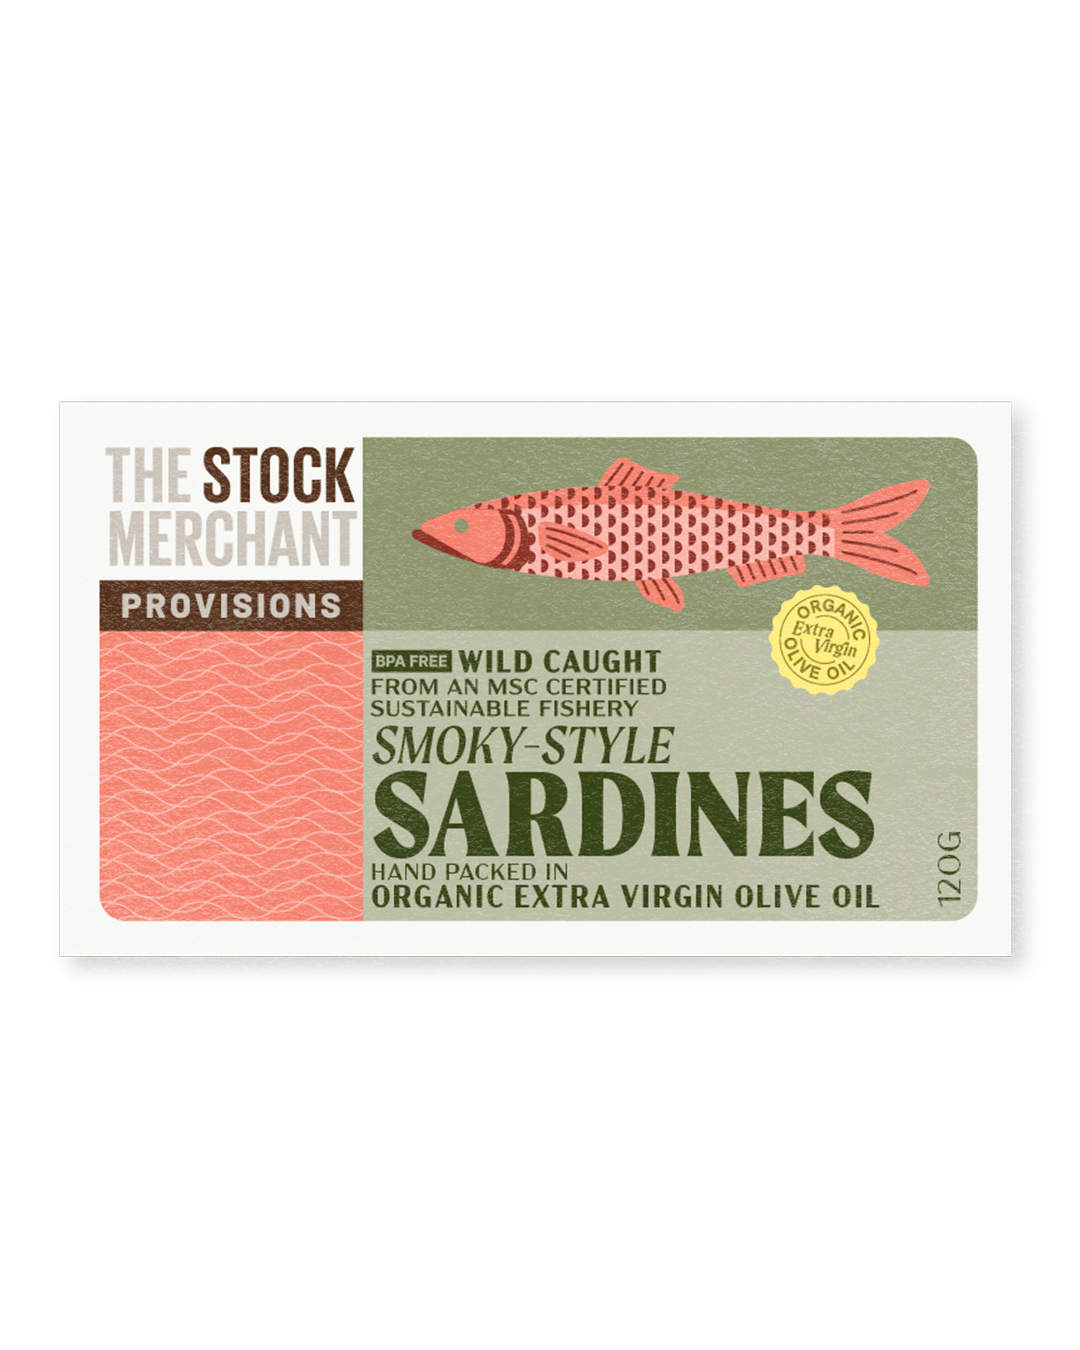 Provisiones enlatadas: sardinas ahumadas silvestres